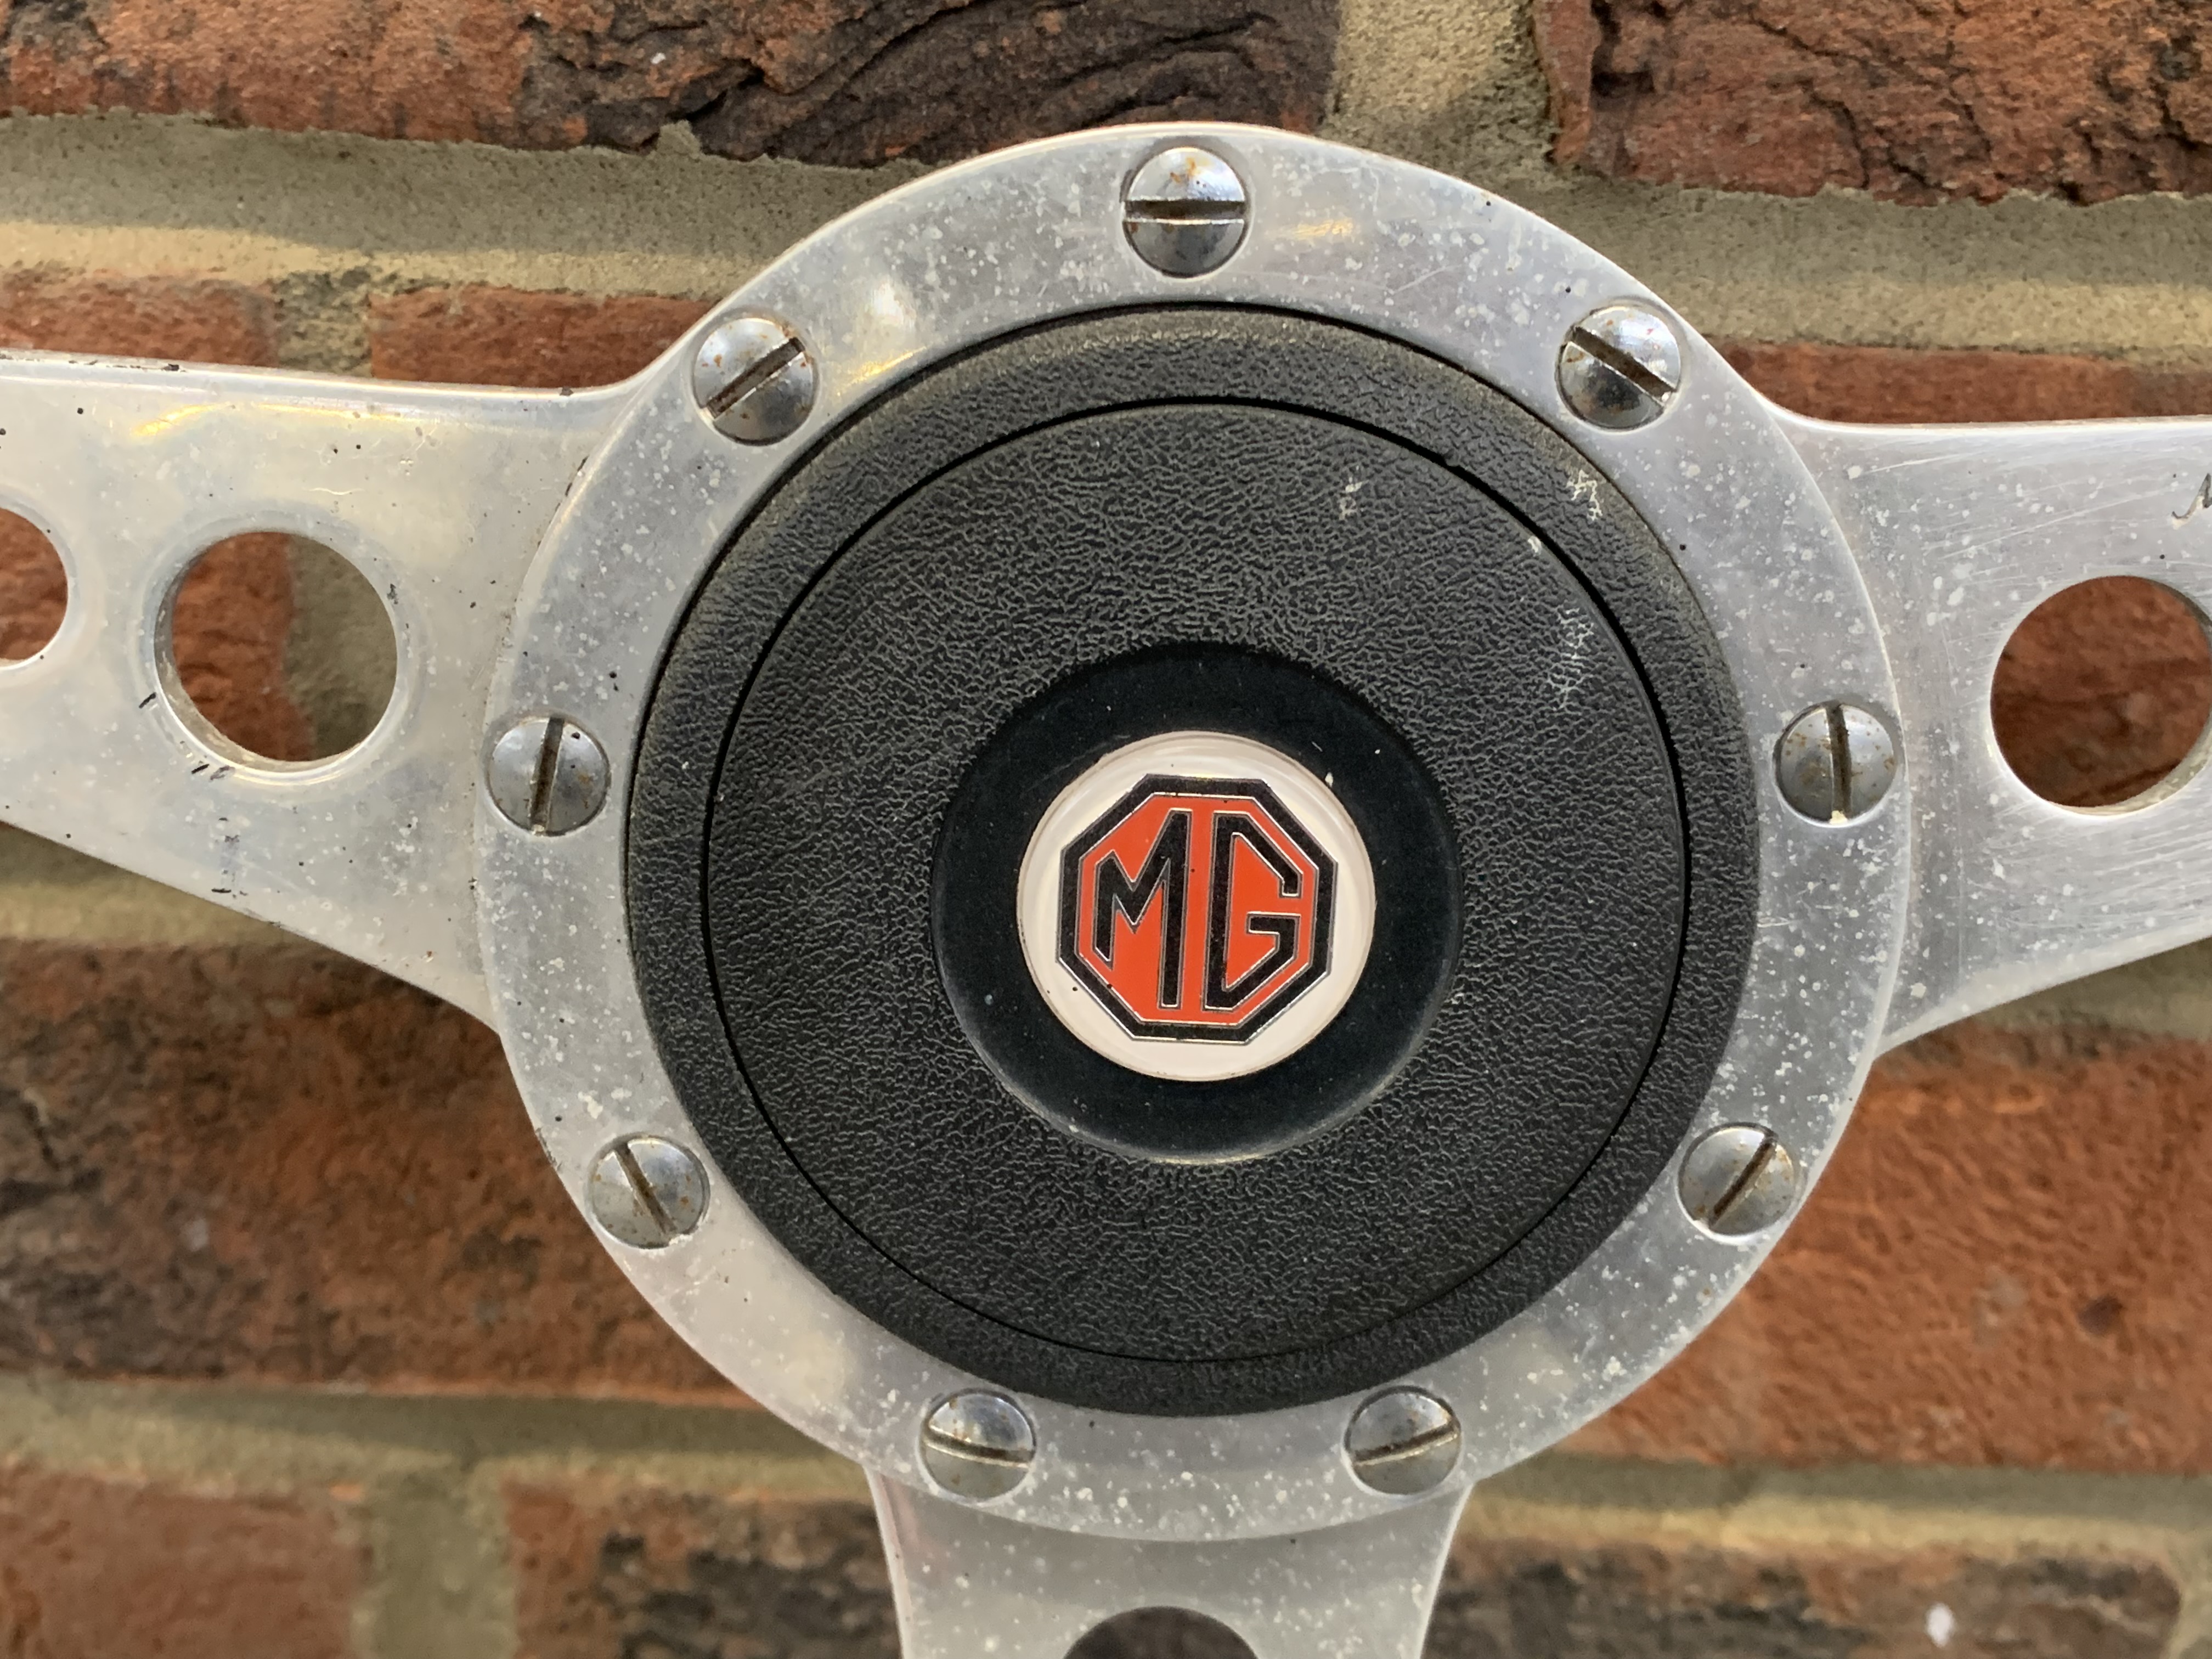 Moto-Lita Wood Rimmed Steering Wheel with MG Boss - Image 3 of 5